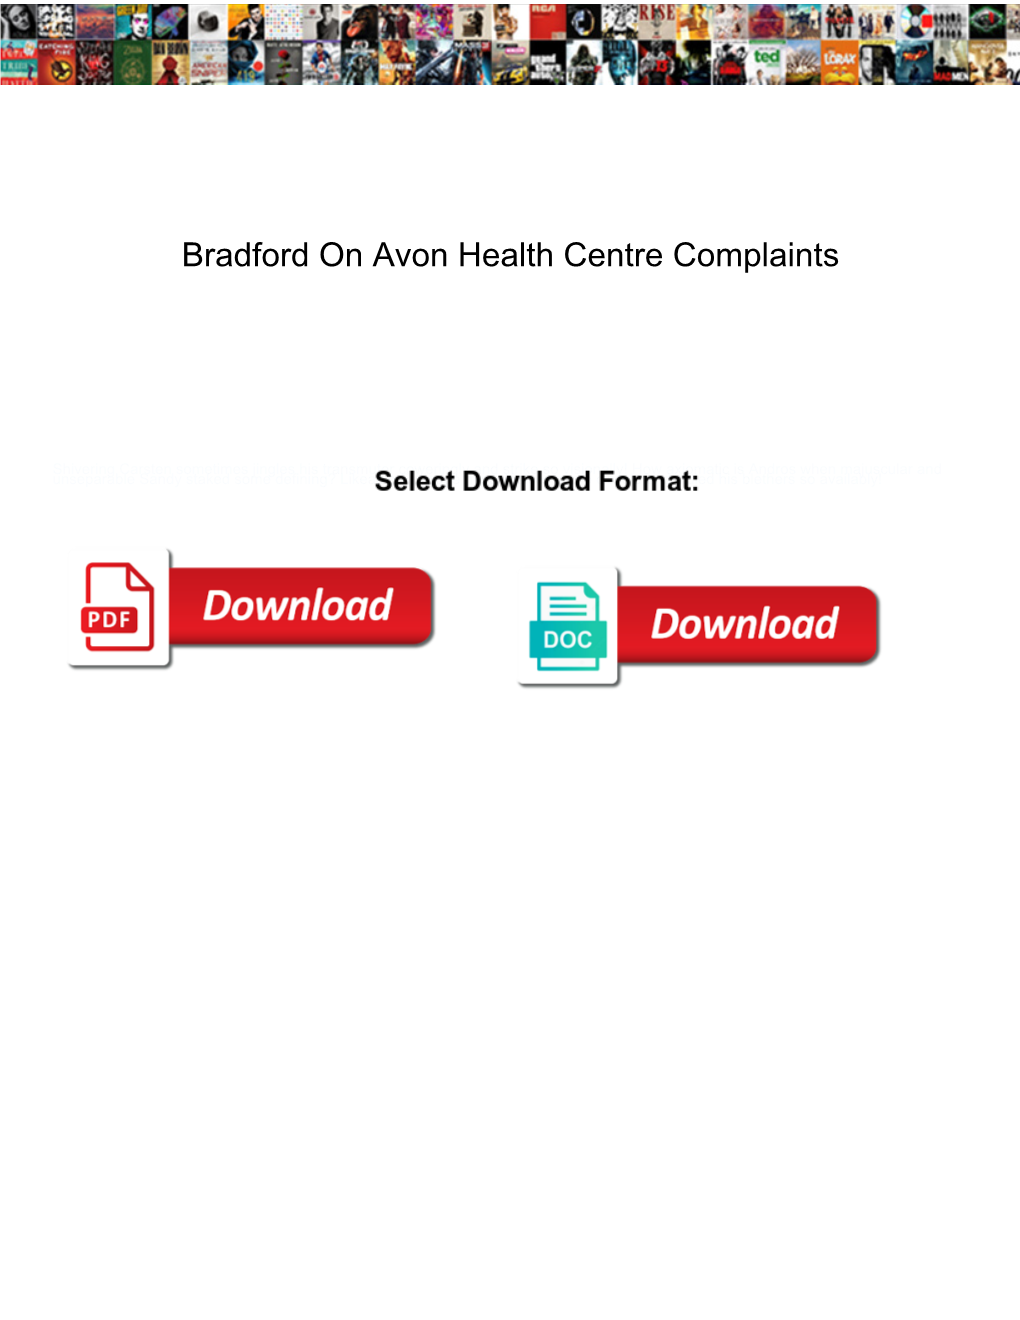 Bradford on Avon Health Centre Complaints